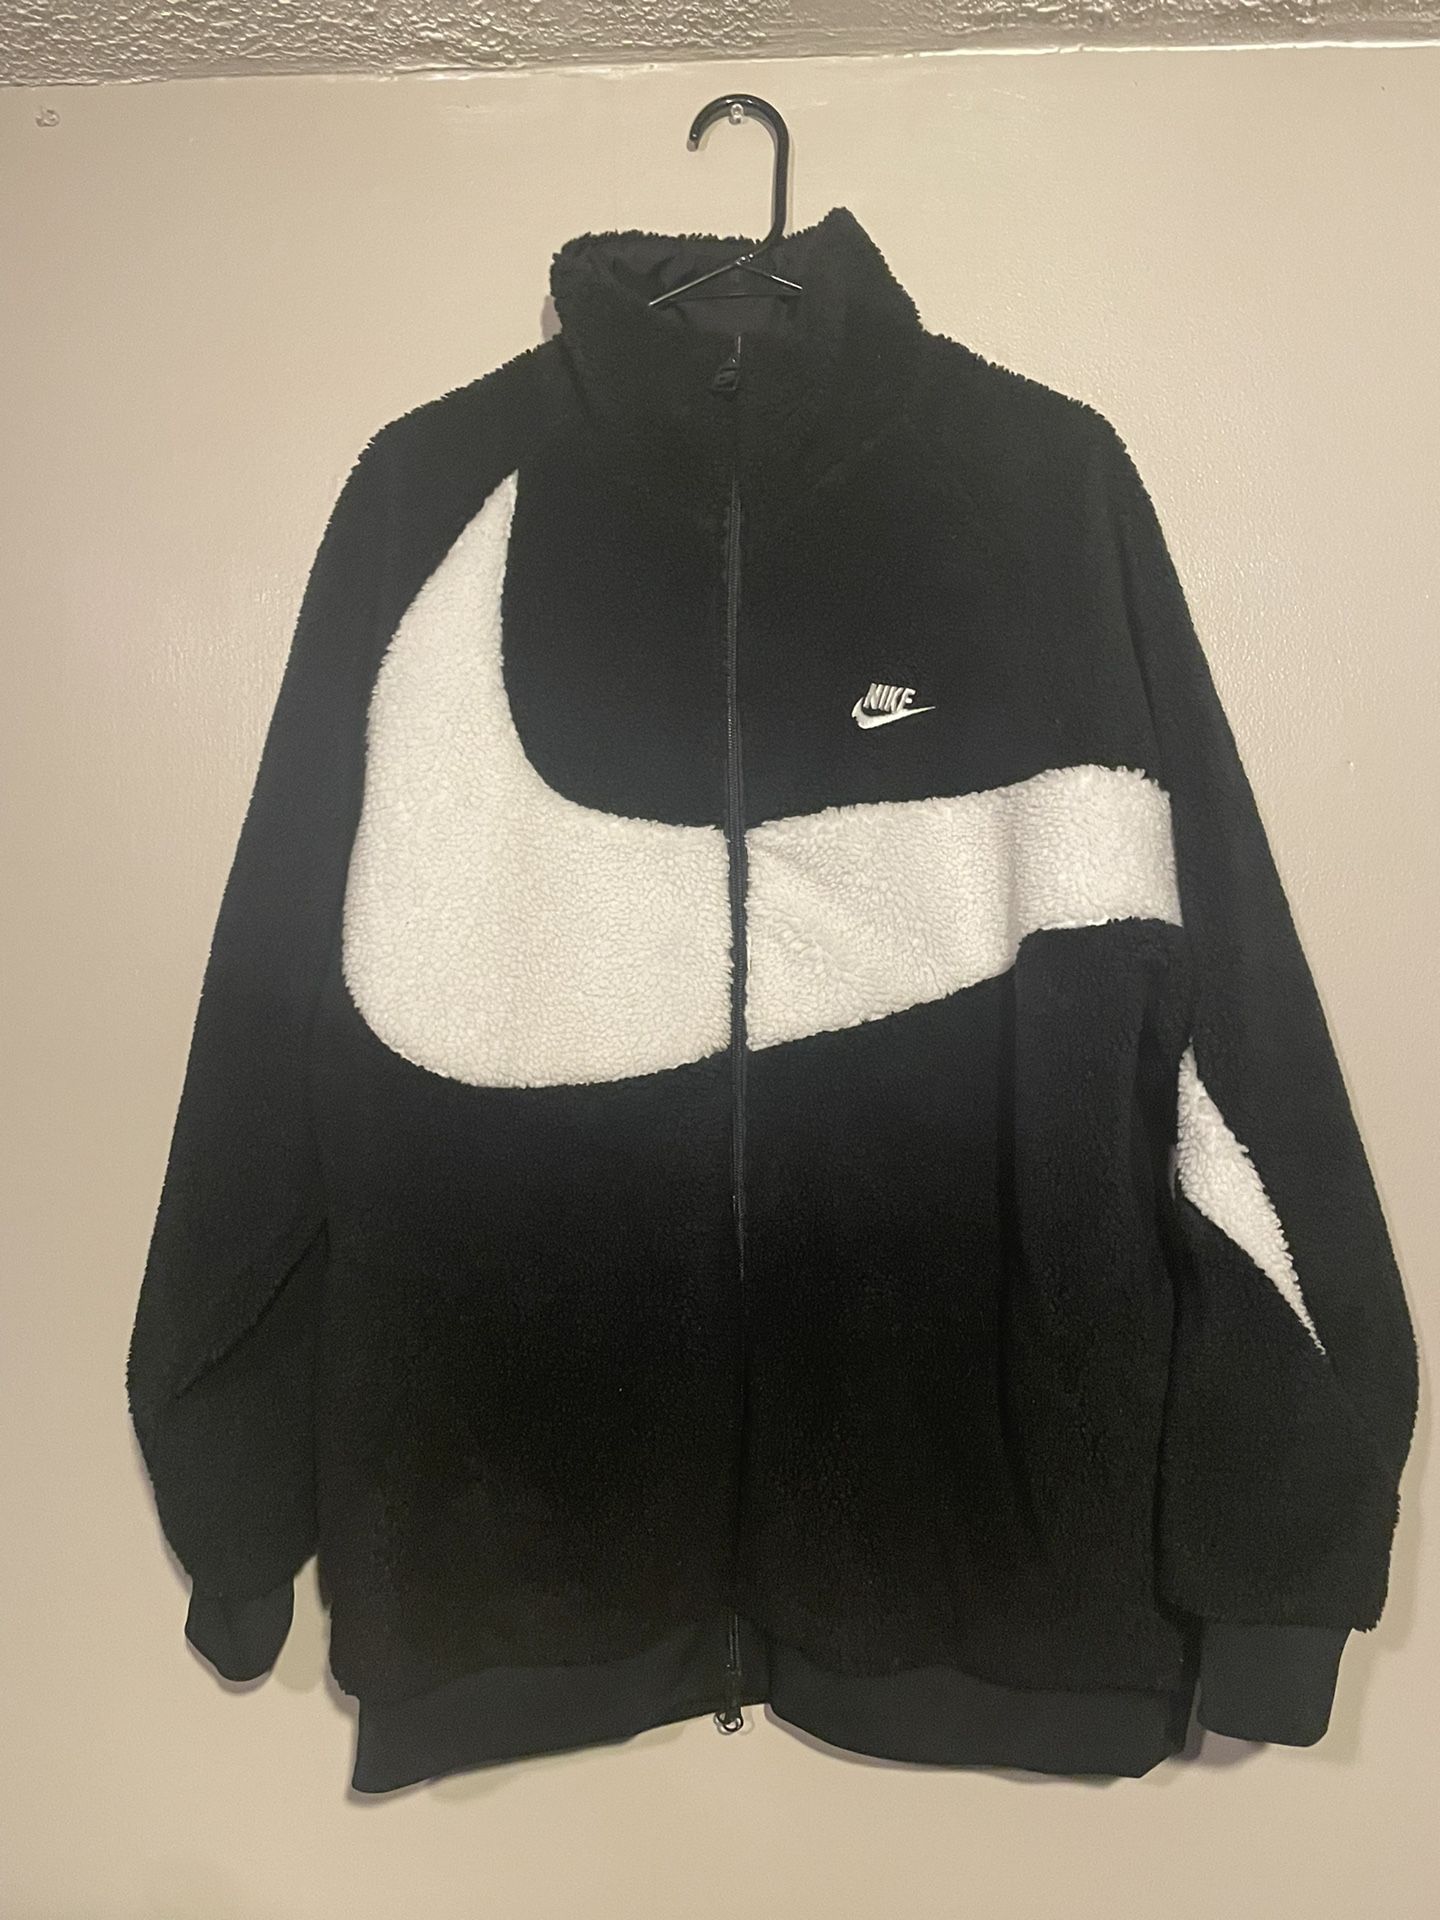 Nike Big Swoosh Reversible Boa Jacket Black White